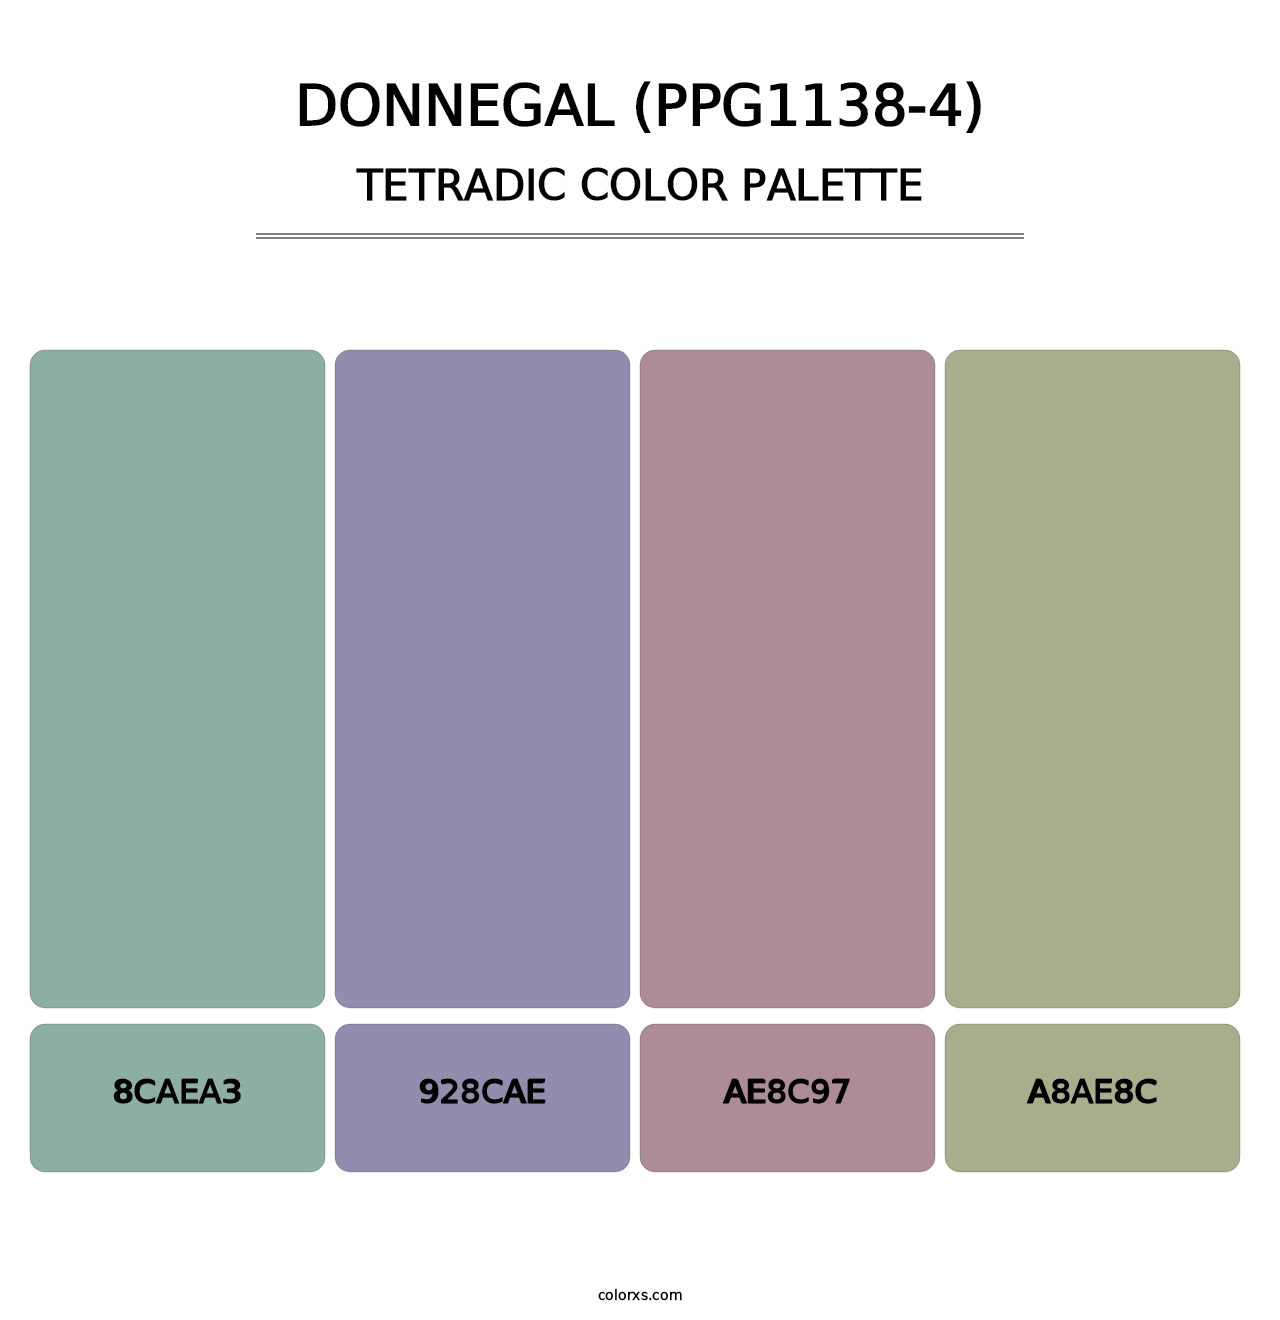 Donnegal (PPG1138-4) - Tetradic Color Palette